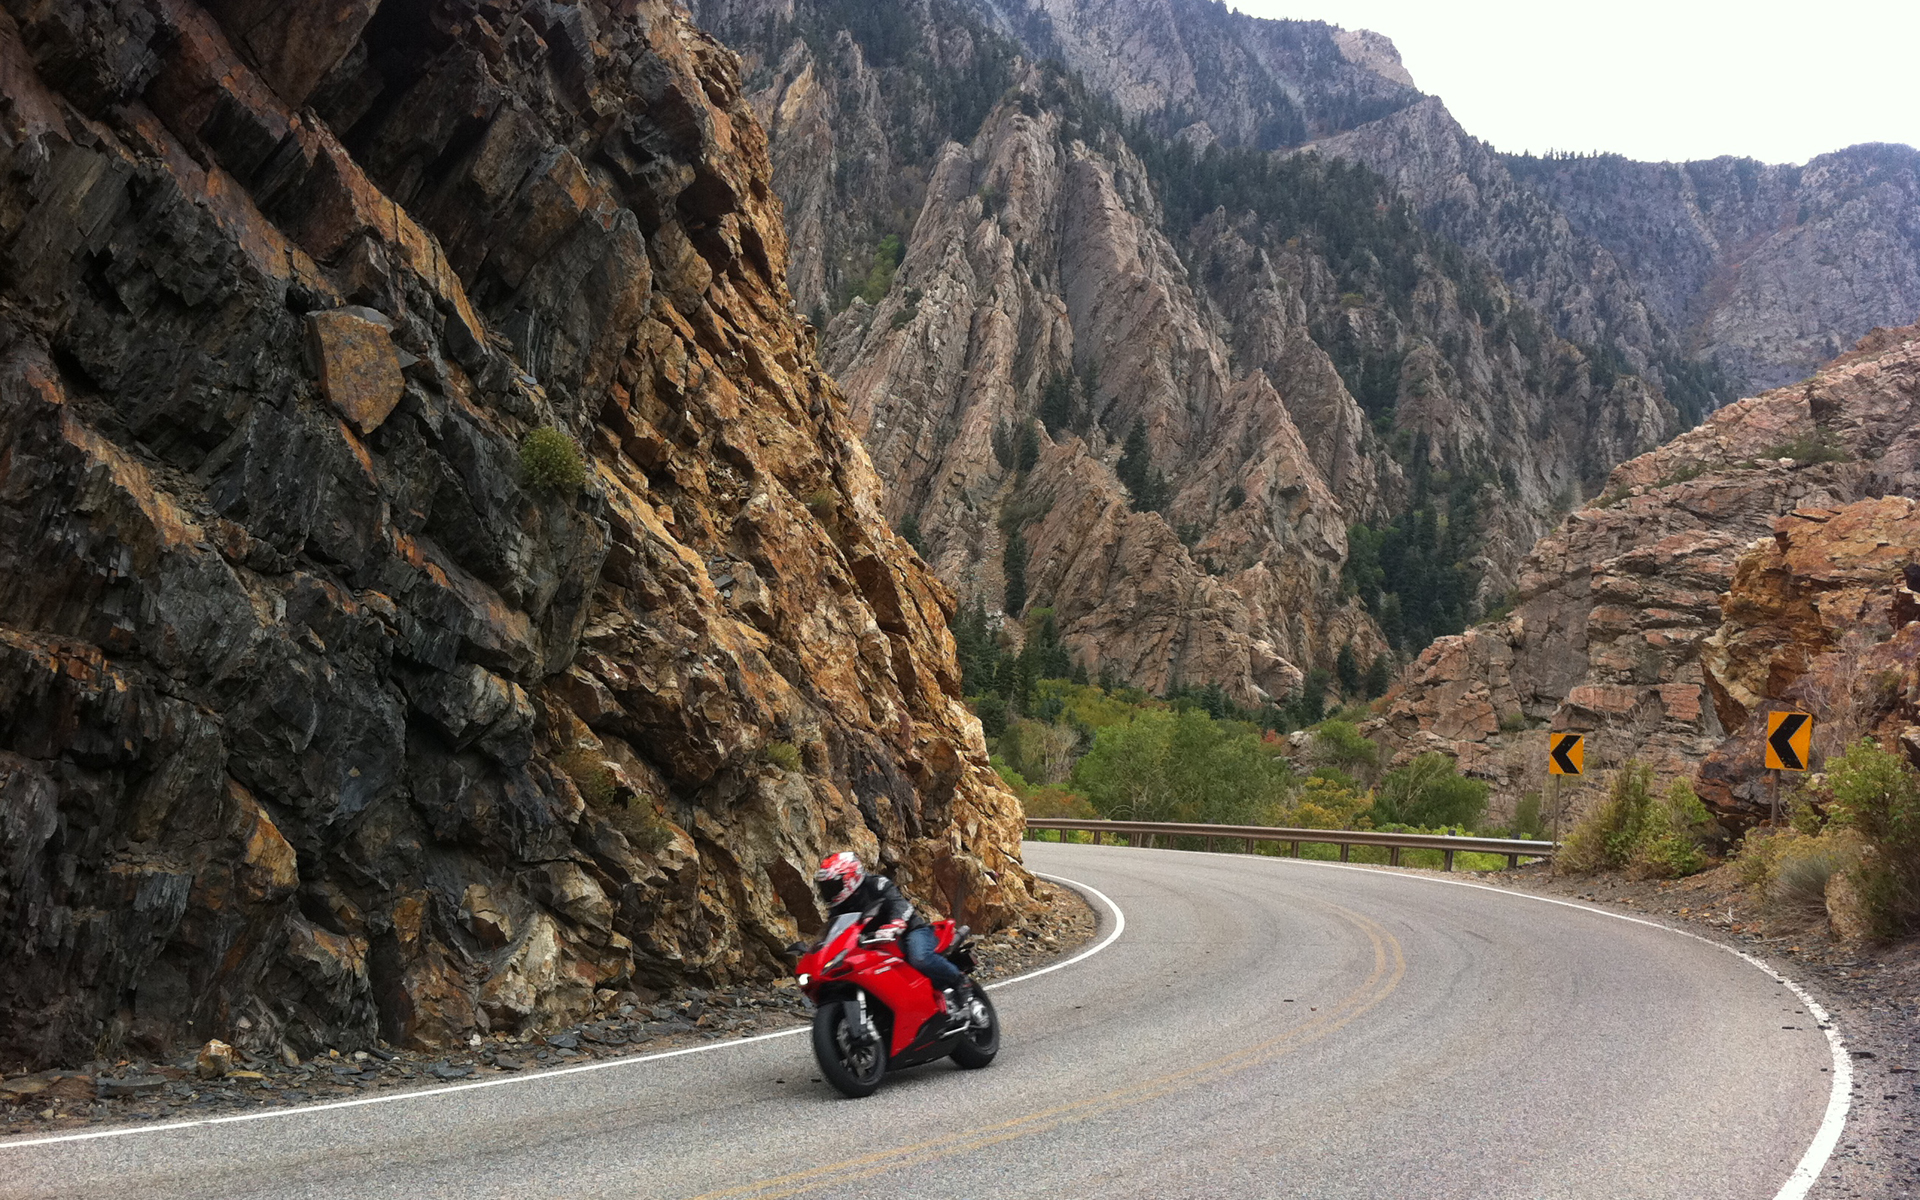 ducati, motorcycles, vehicles, canyon, motorcycle 2160p